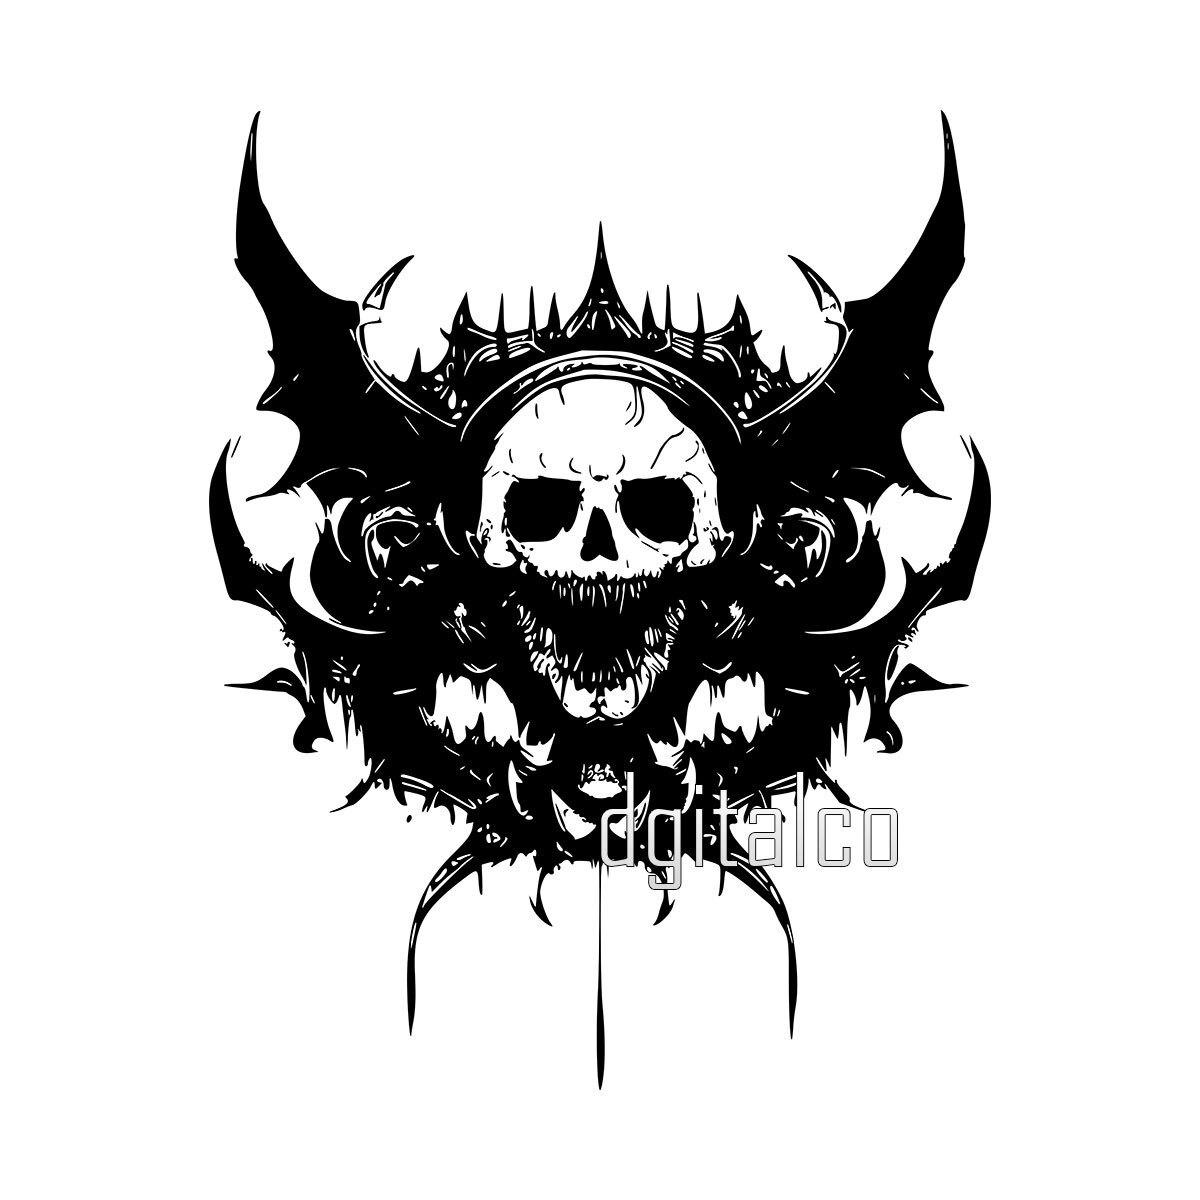 50 Cool Black and White Goth Laptop Stickers Dark Skull Tattoo Decals | eBay